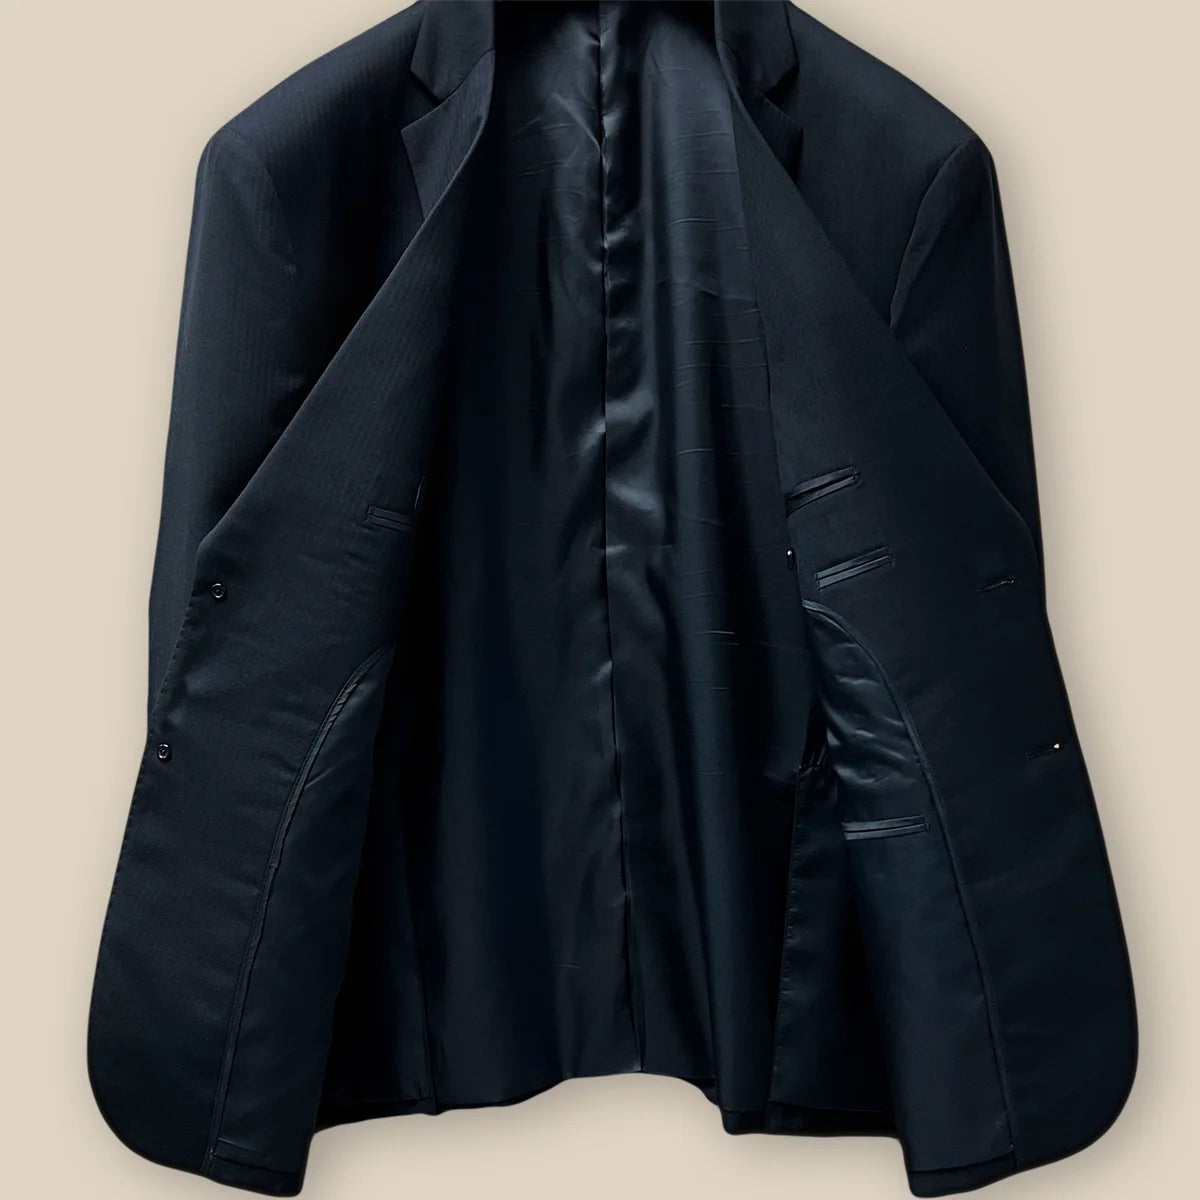 Comprehensive inside view of a black herringbone jacket's craftsmanship.